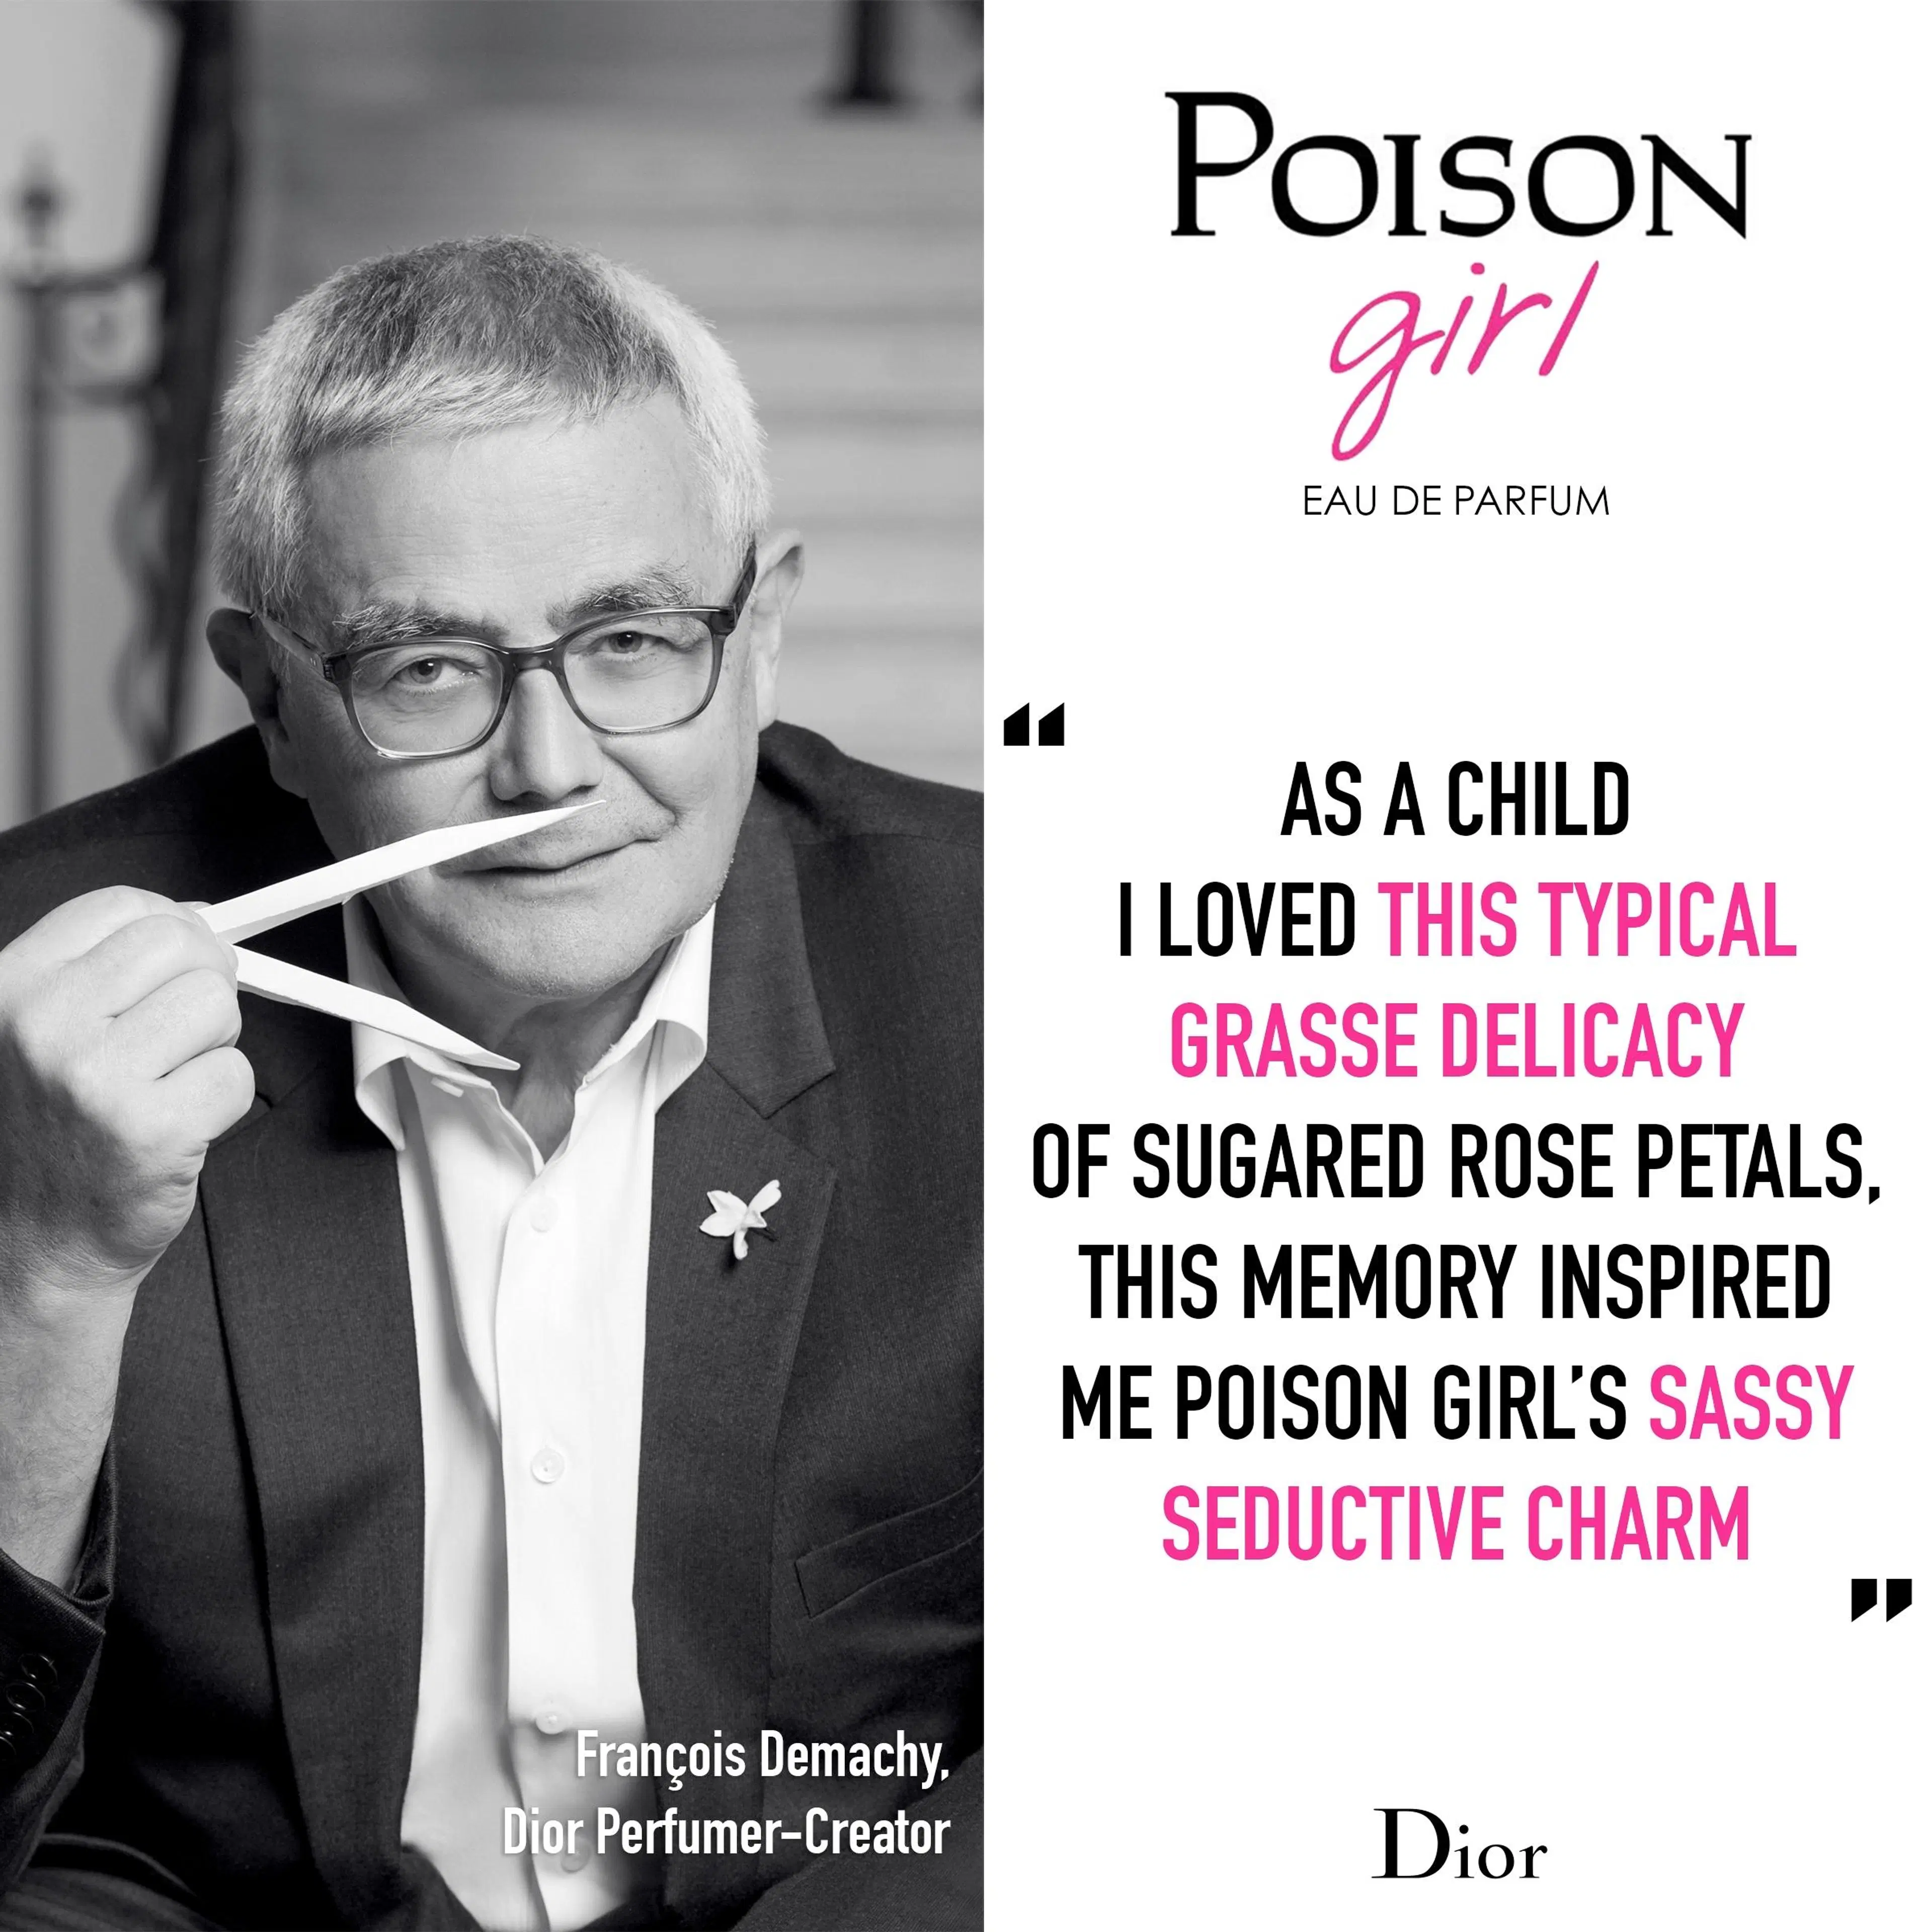 DIOR Poison Girl EdP tuoksu 50 ml